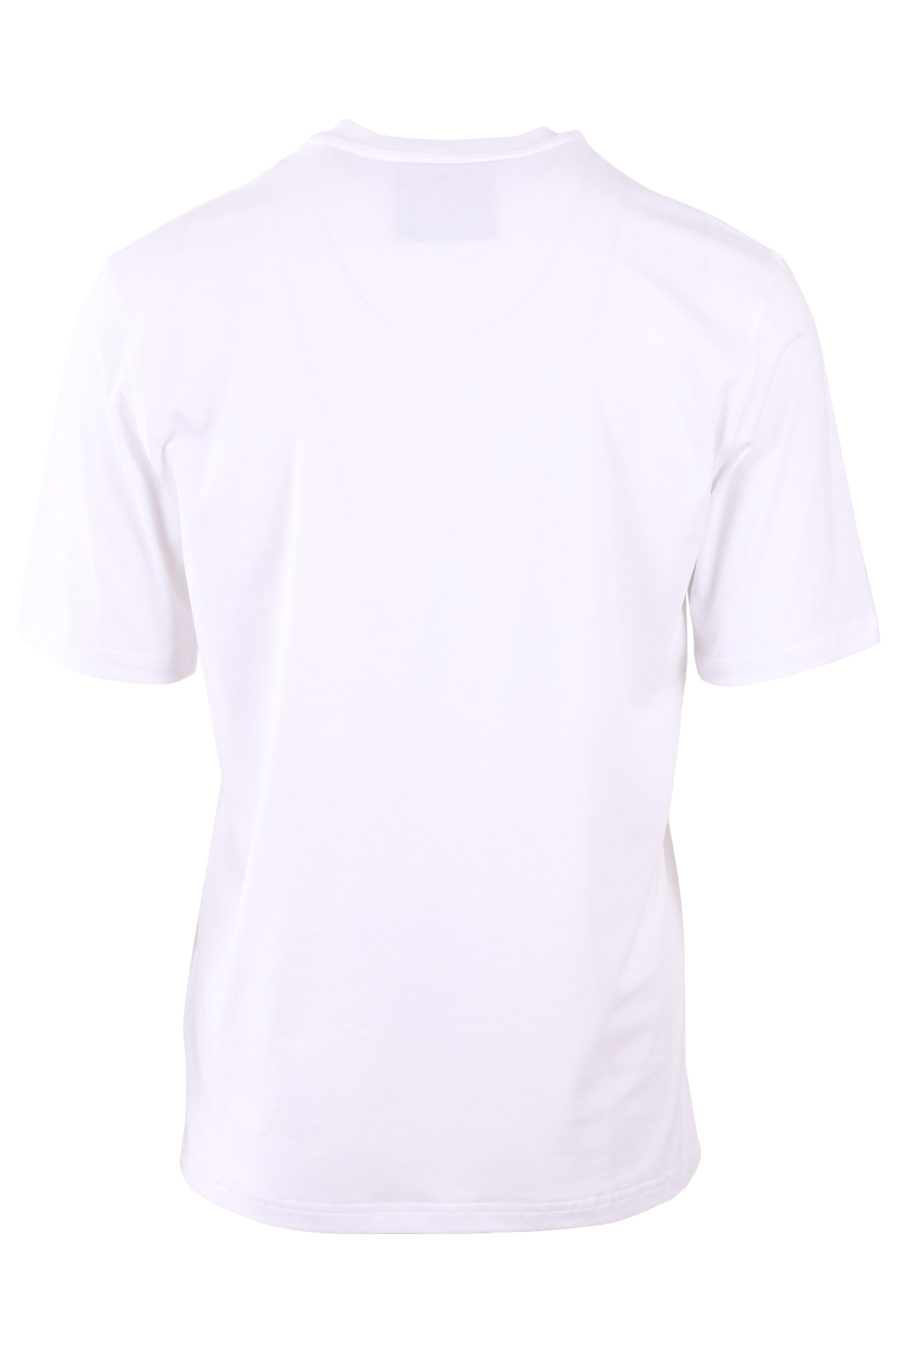 Camiseta blanca con logo symbols - 6c95c609fb18d2f6944af2c784948aaa44dce5a9